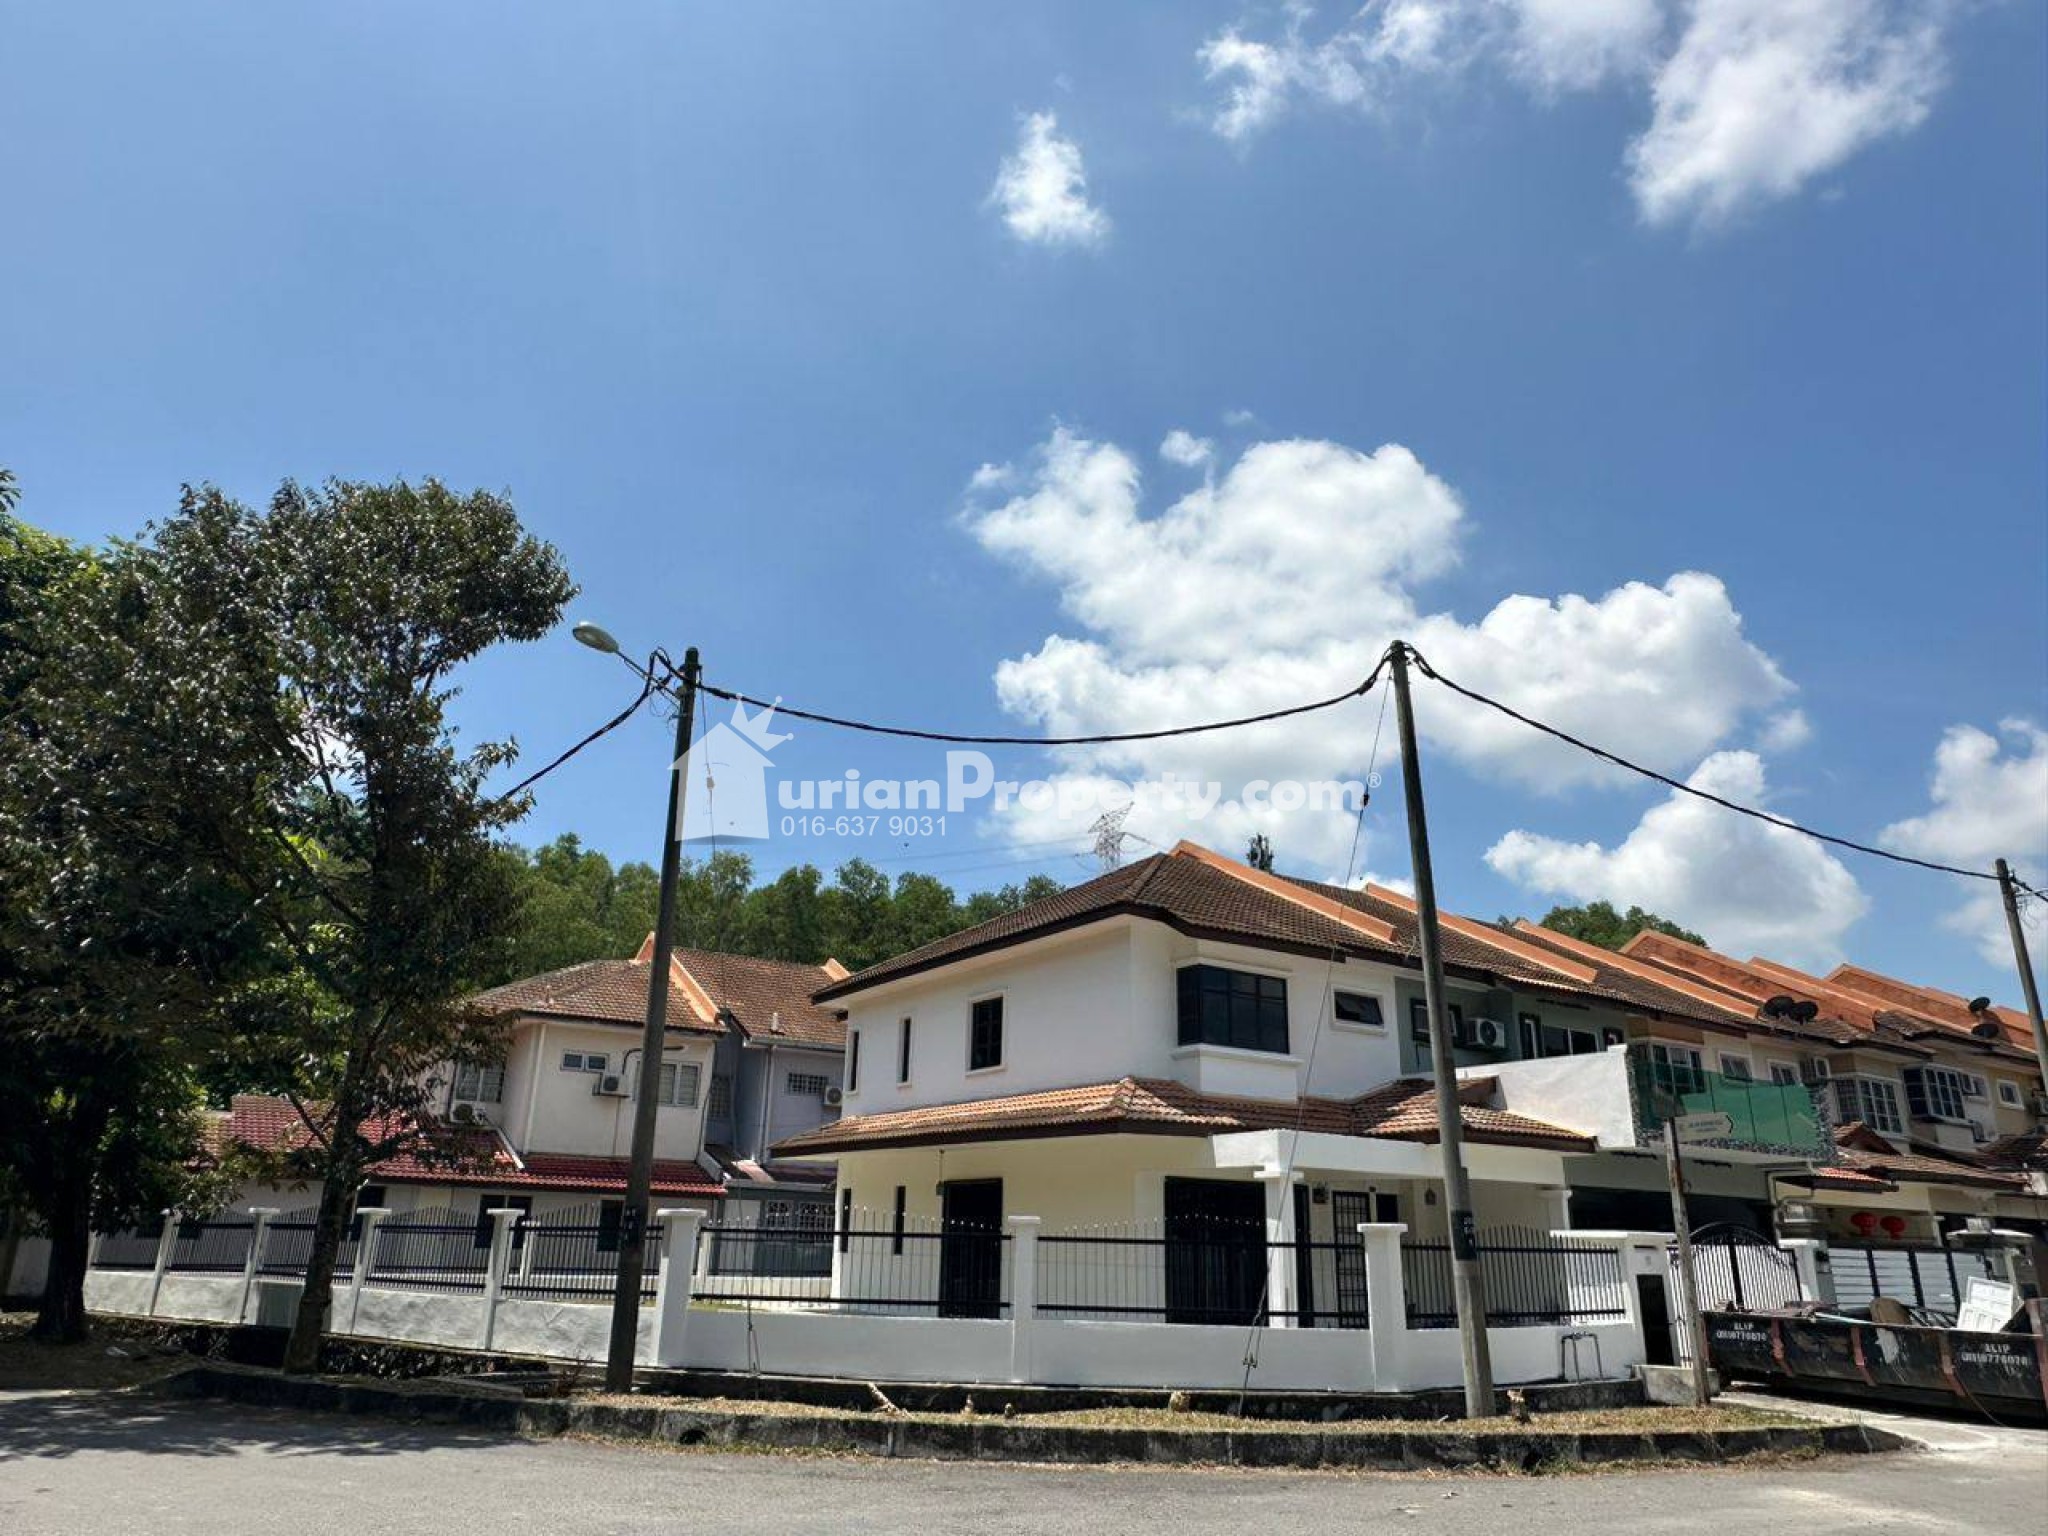 Terrace House For Sale at Bandar Sunway Semenyih